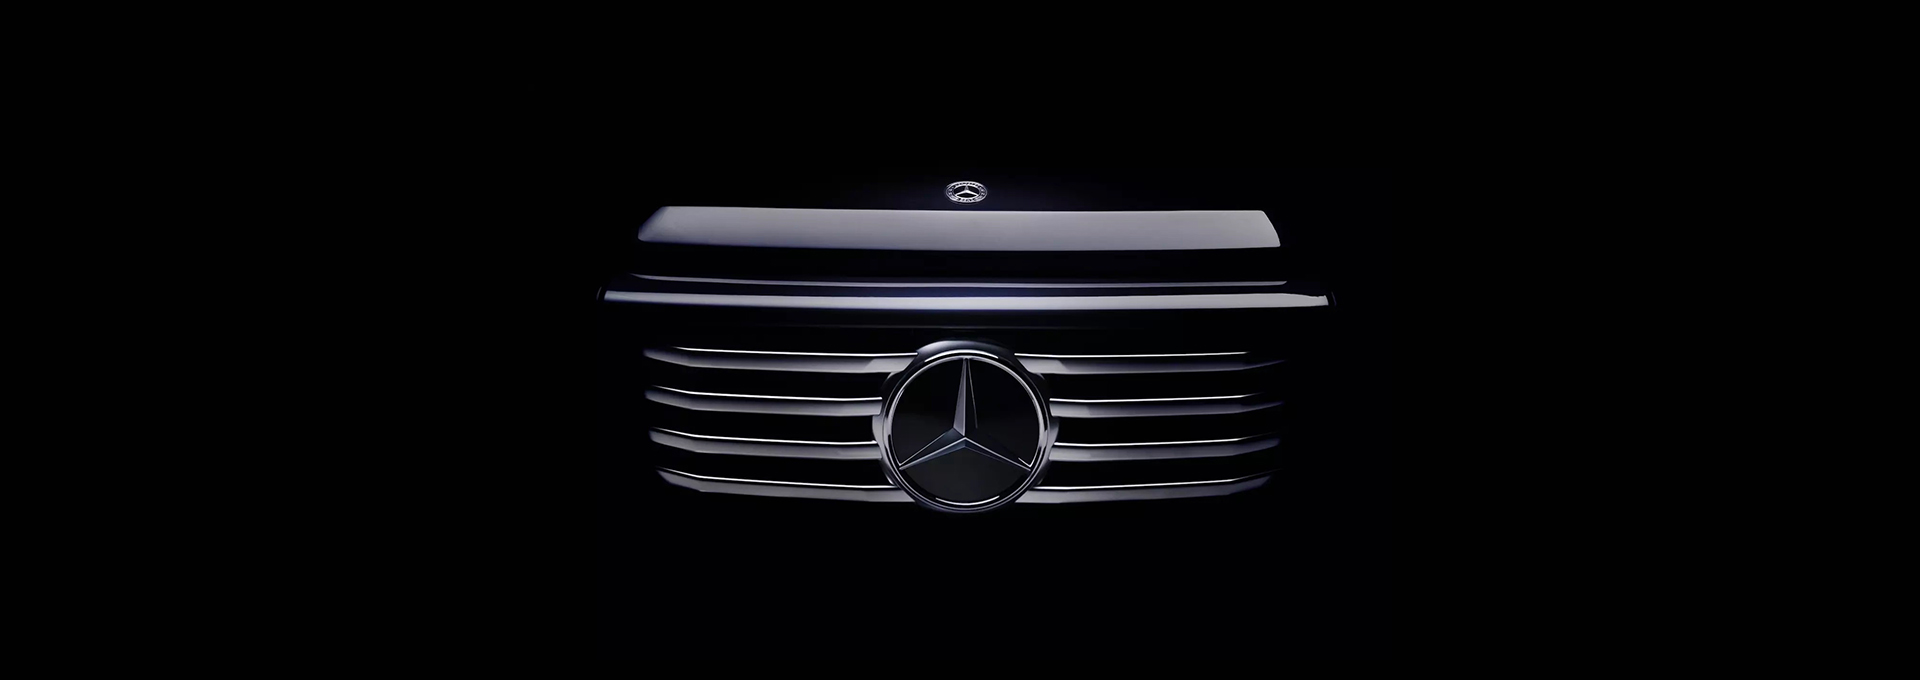 Mercedes-Benz показал тизер нового G-Class